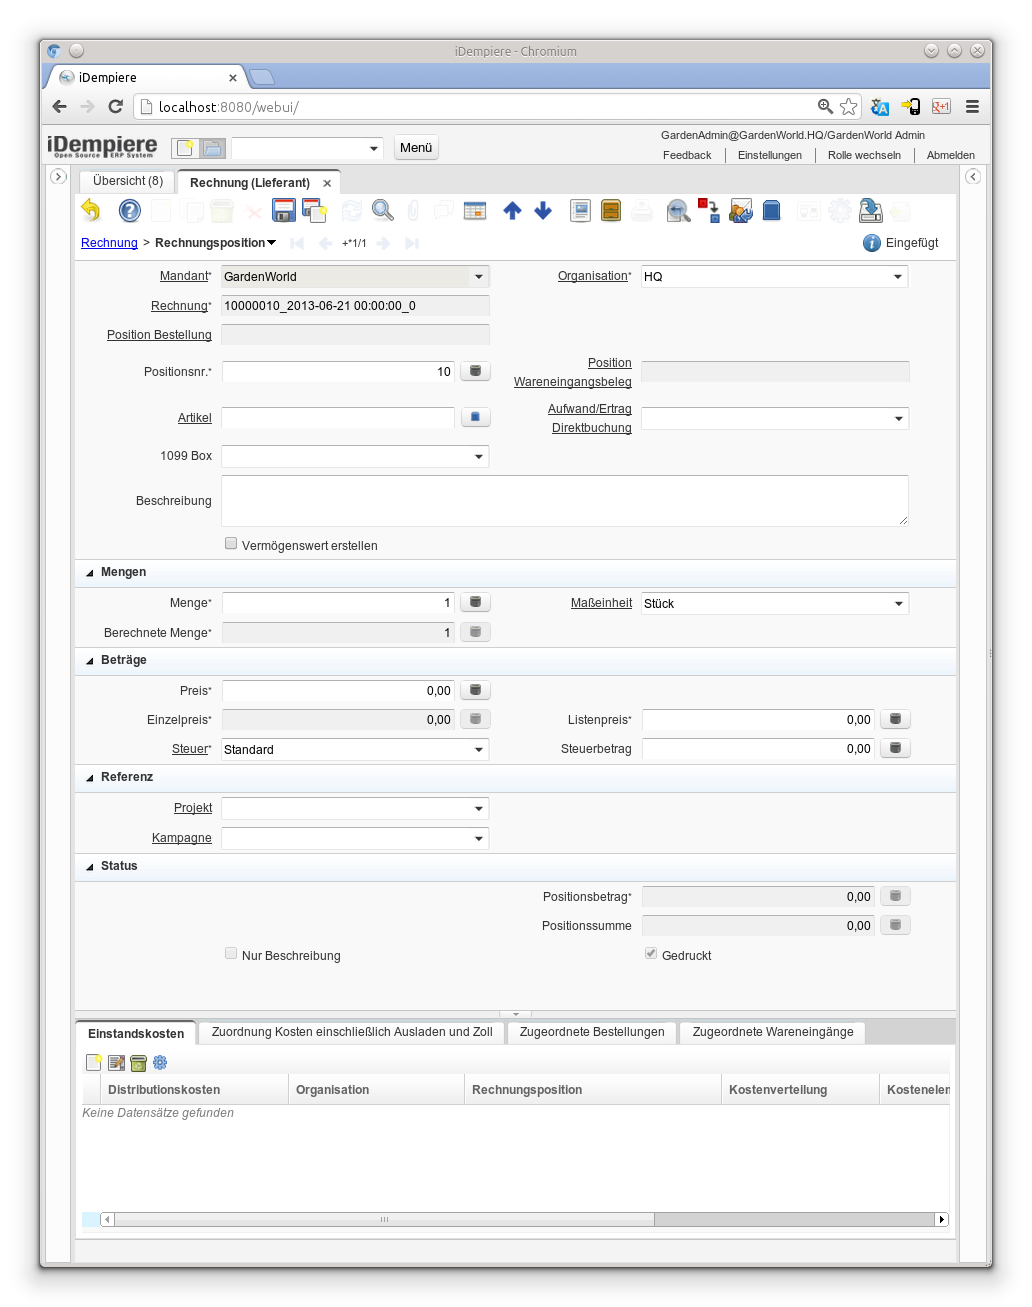 Rechnung (Lieferant) - Rechnungsposition - Fenster (iDempiere 1.0.0).png